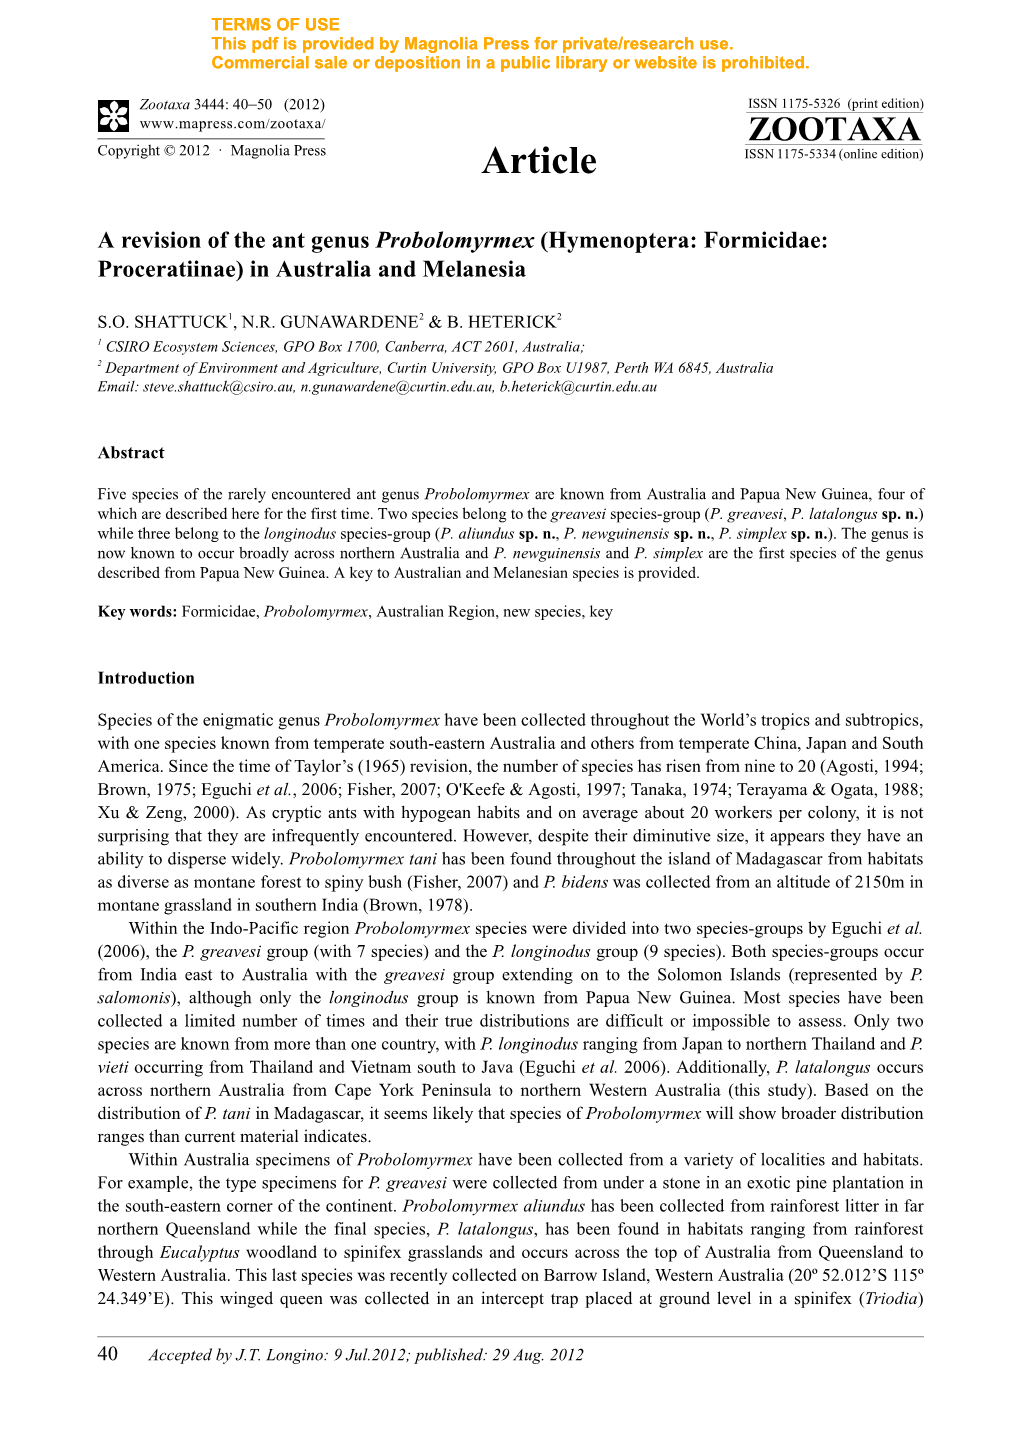 A Revision of the Ant Genus Probolomyrmex (Hymenoptera: Formicidae: Proceratiinae) in Australia and Melanesia